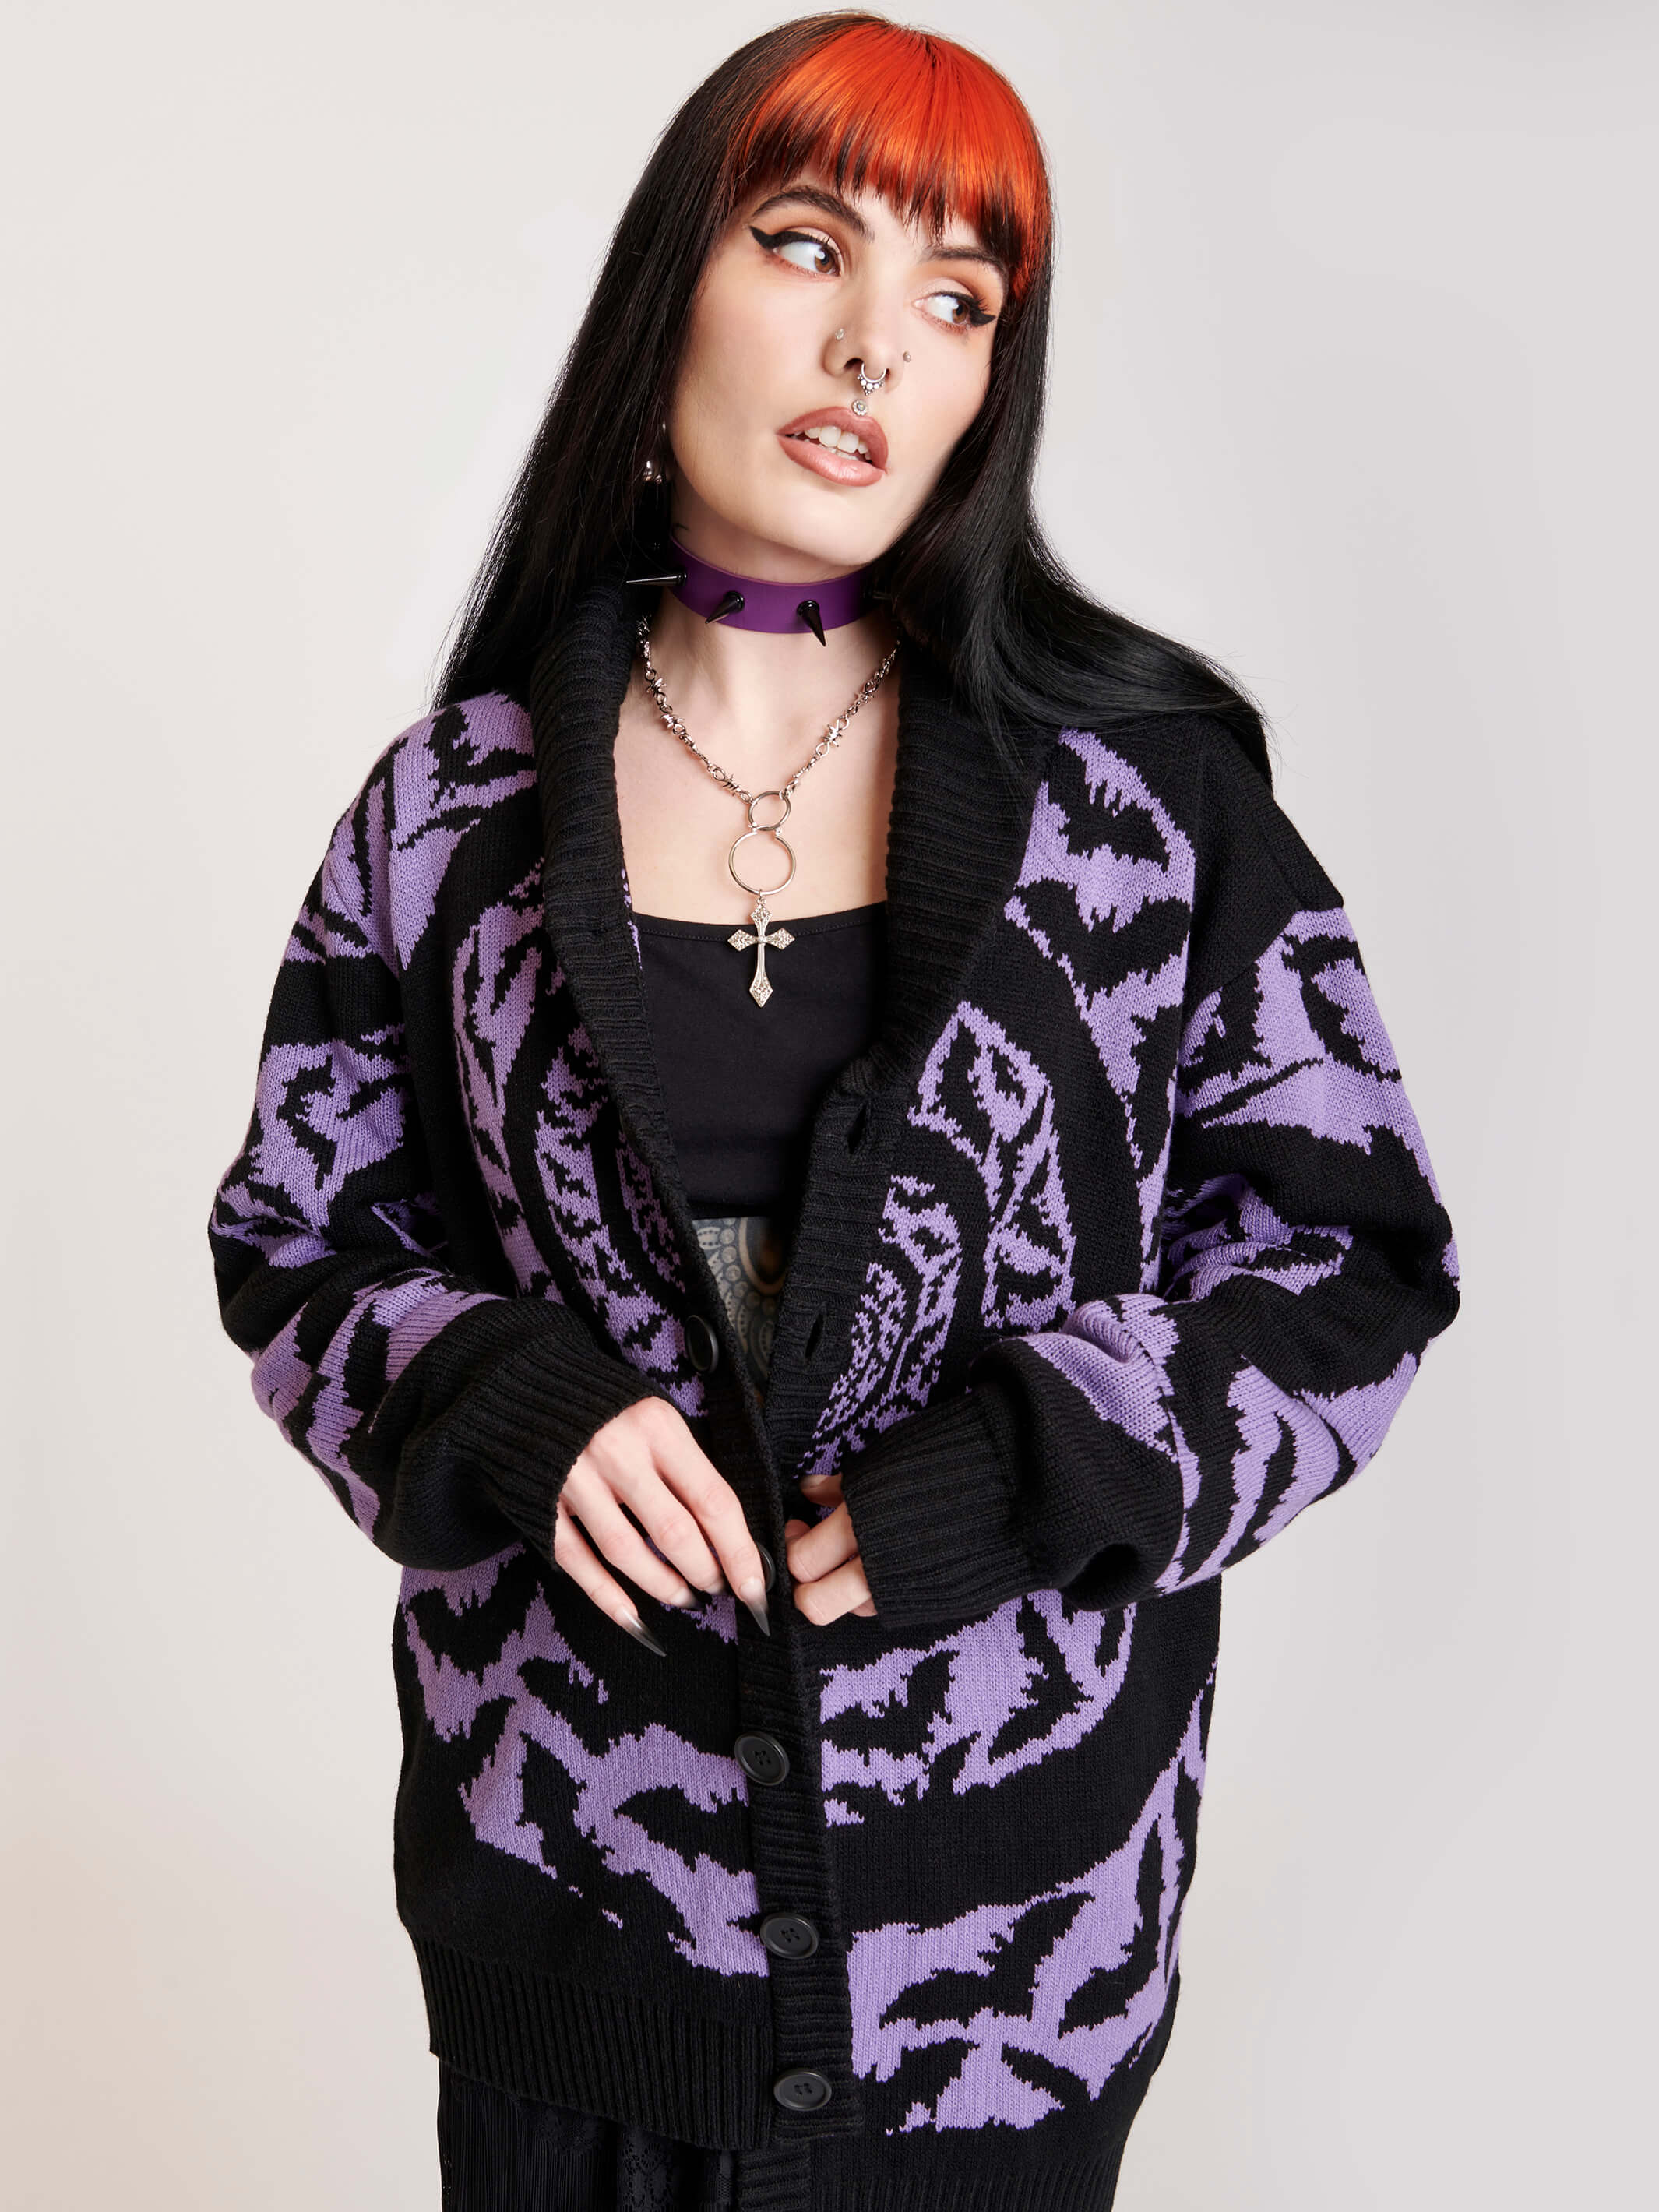 shawl collar cardigan with purple swirl and black bats in flight print